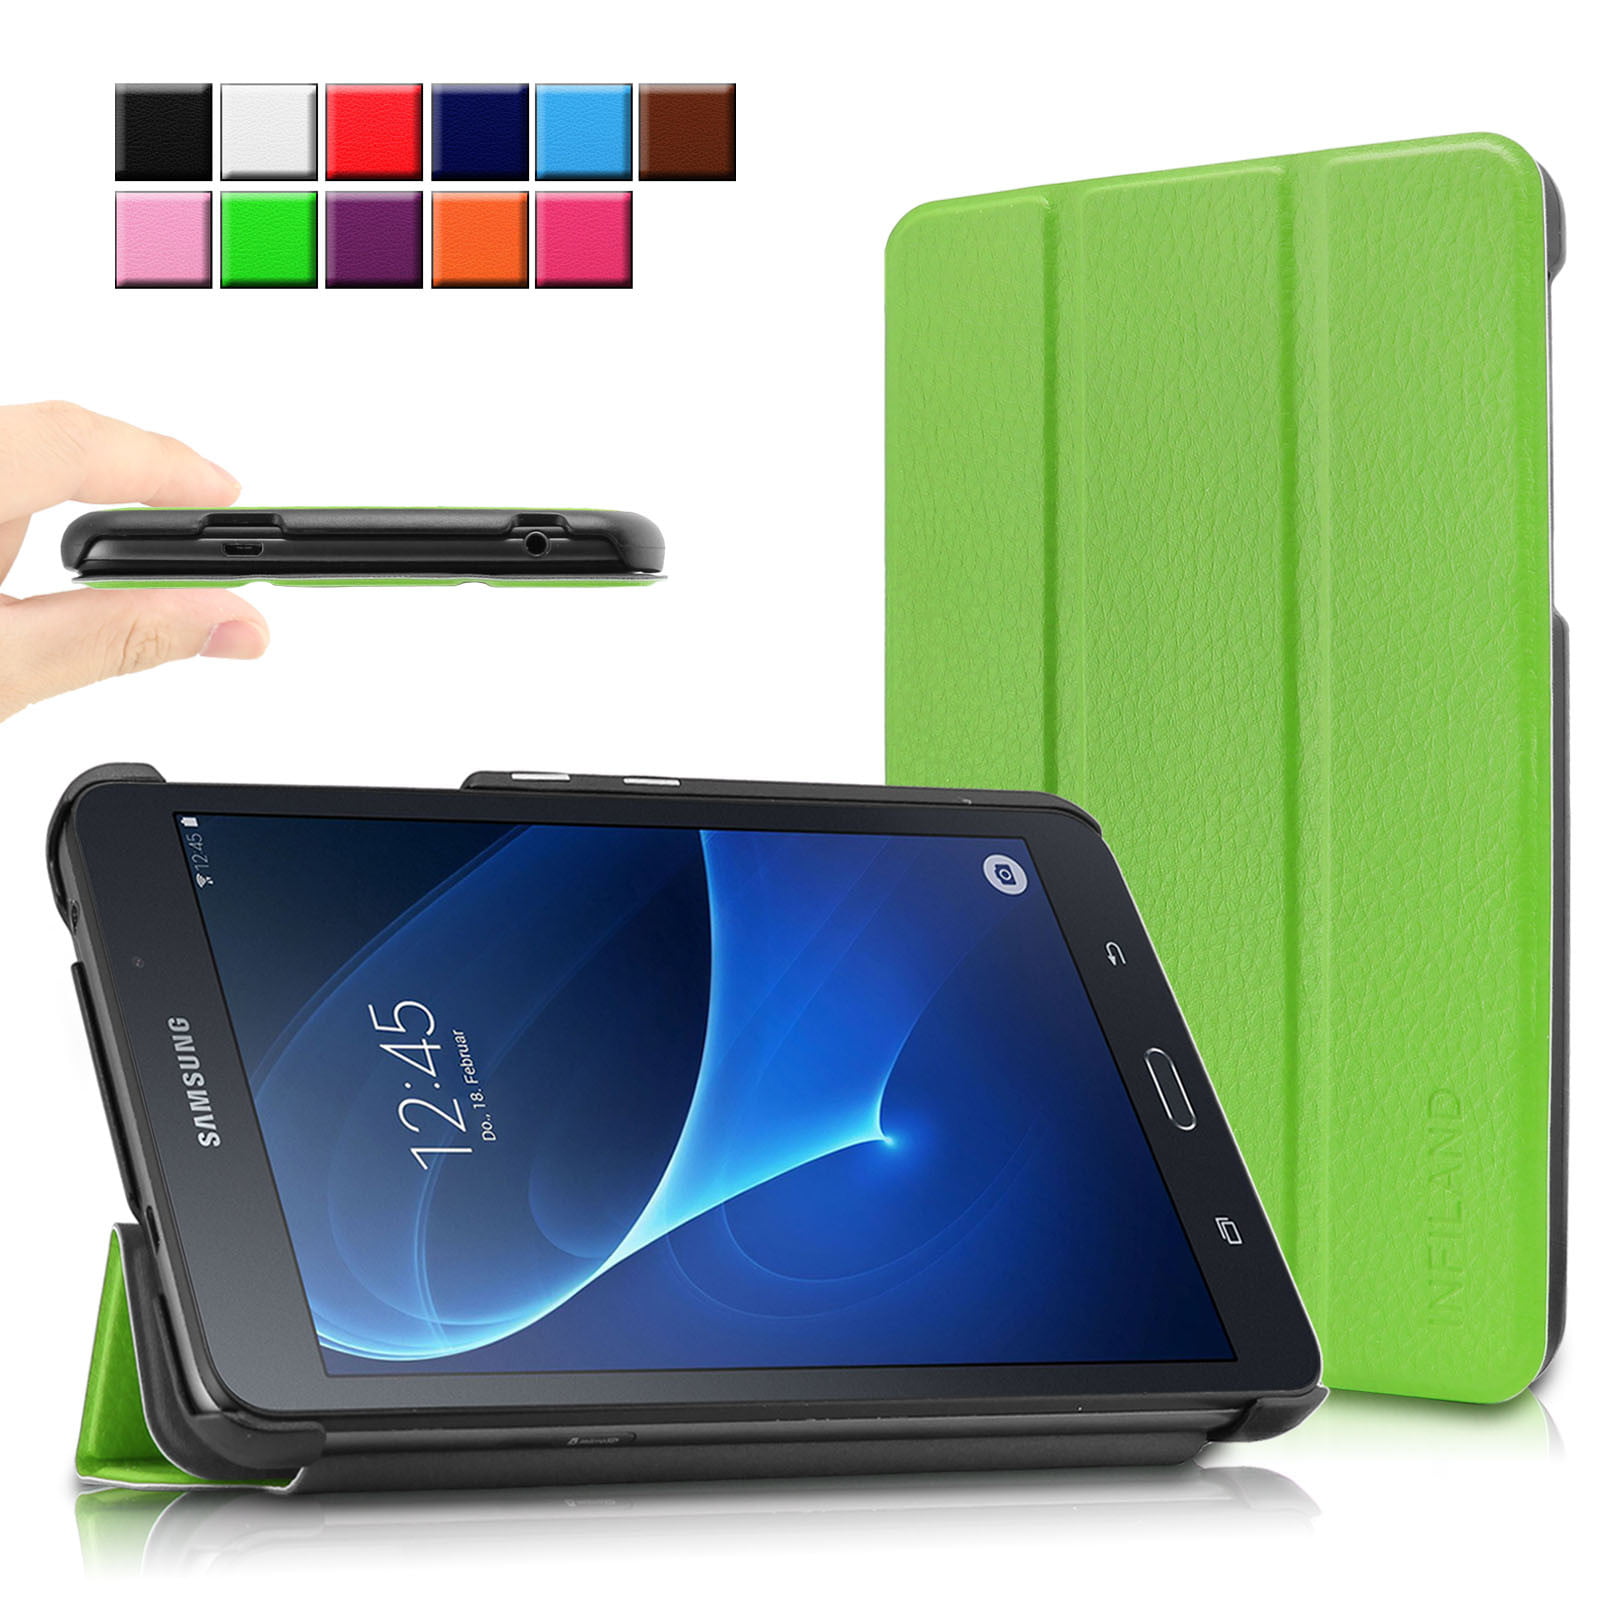 Galaxy Tab A 7.0 Case, Infiland Ultra Smart Cover For Samsung Galaxy